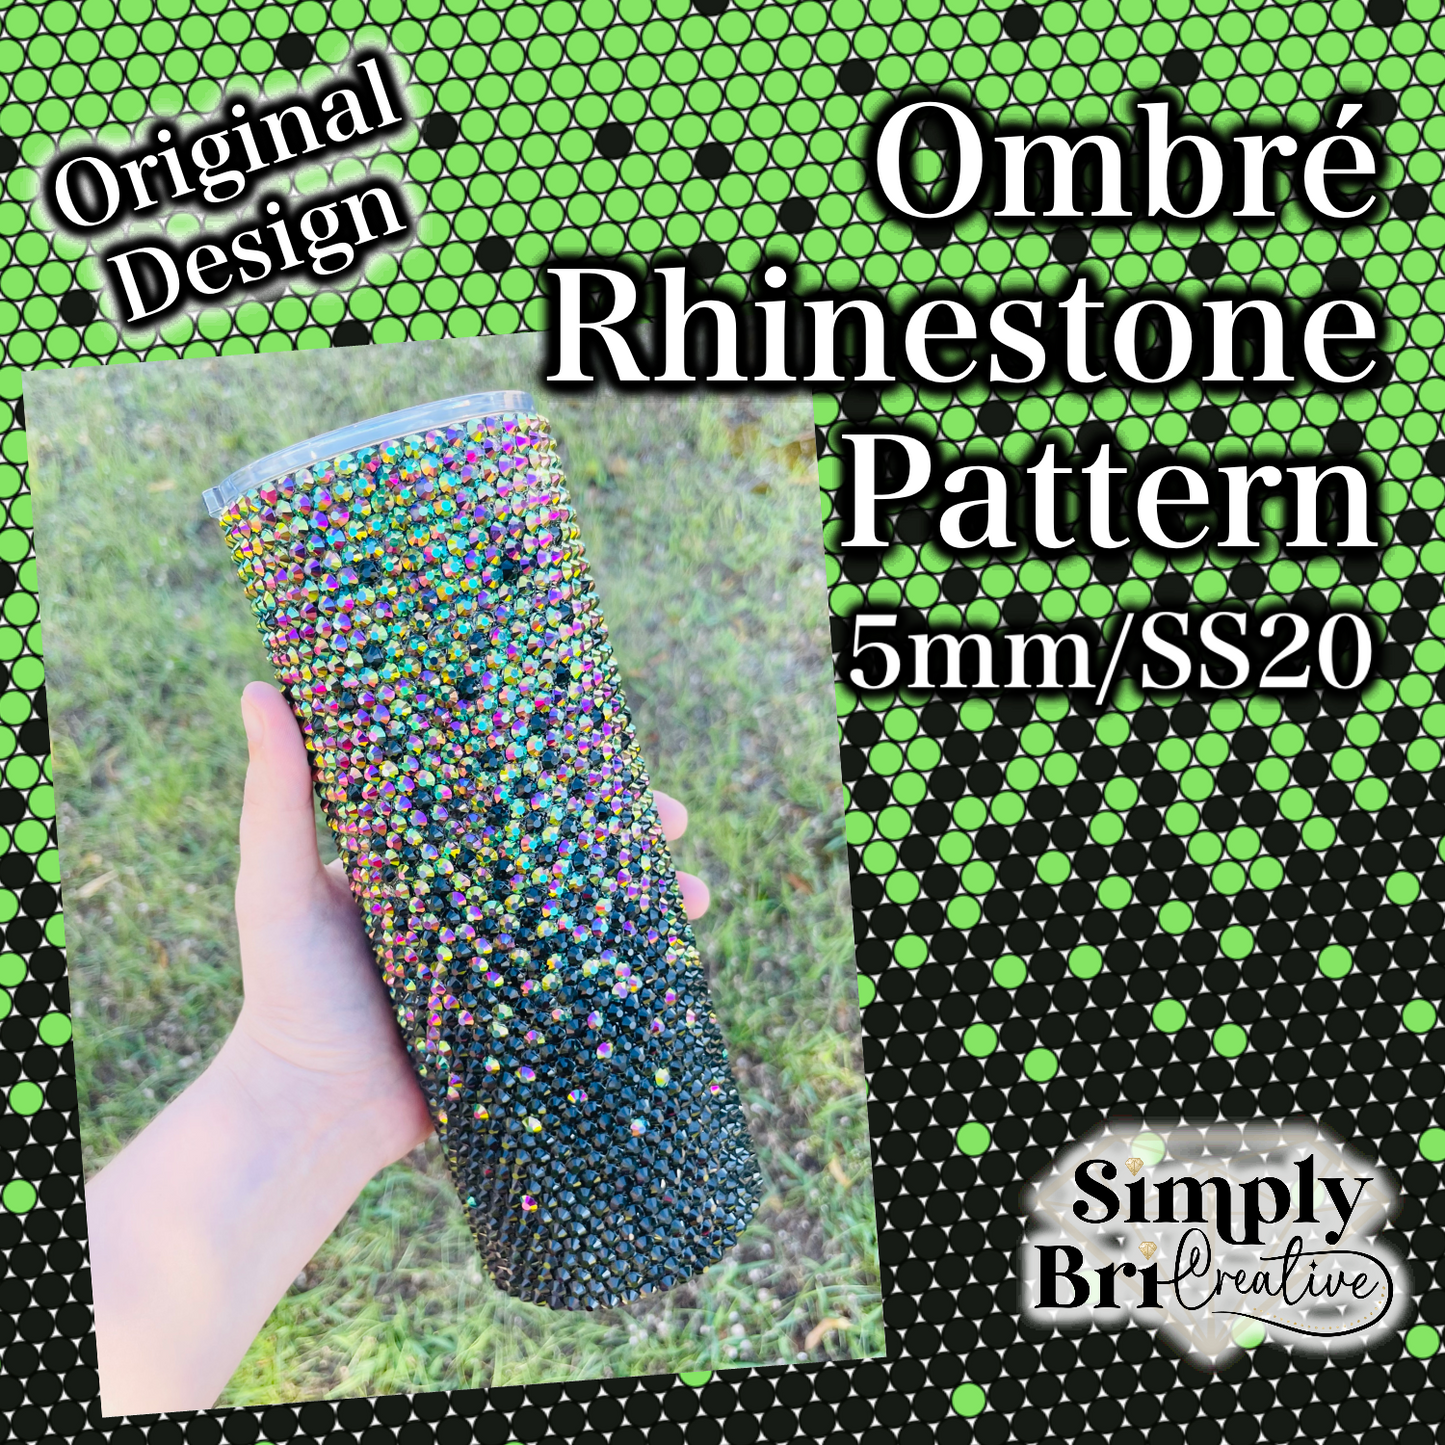 Ombre Rhinestone Pattern (5mm/SS20)